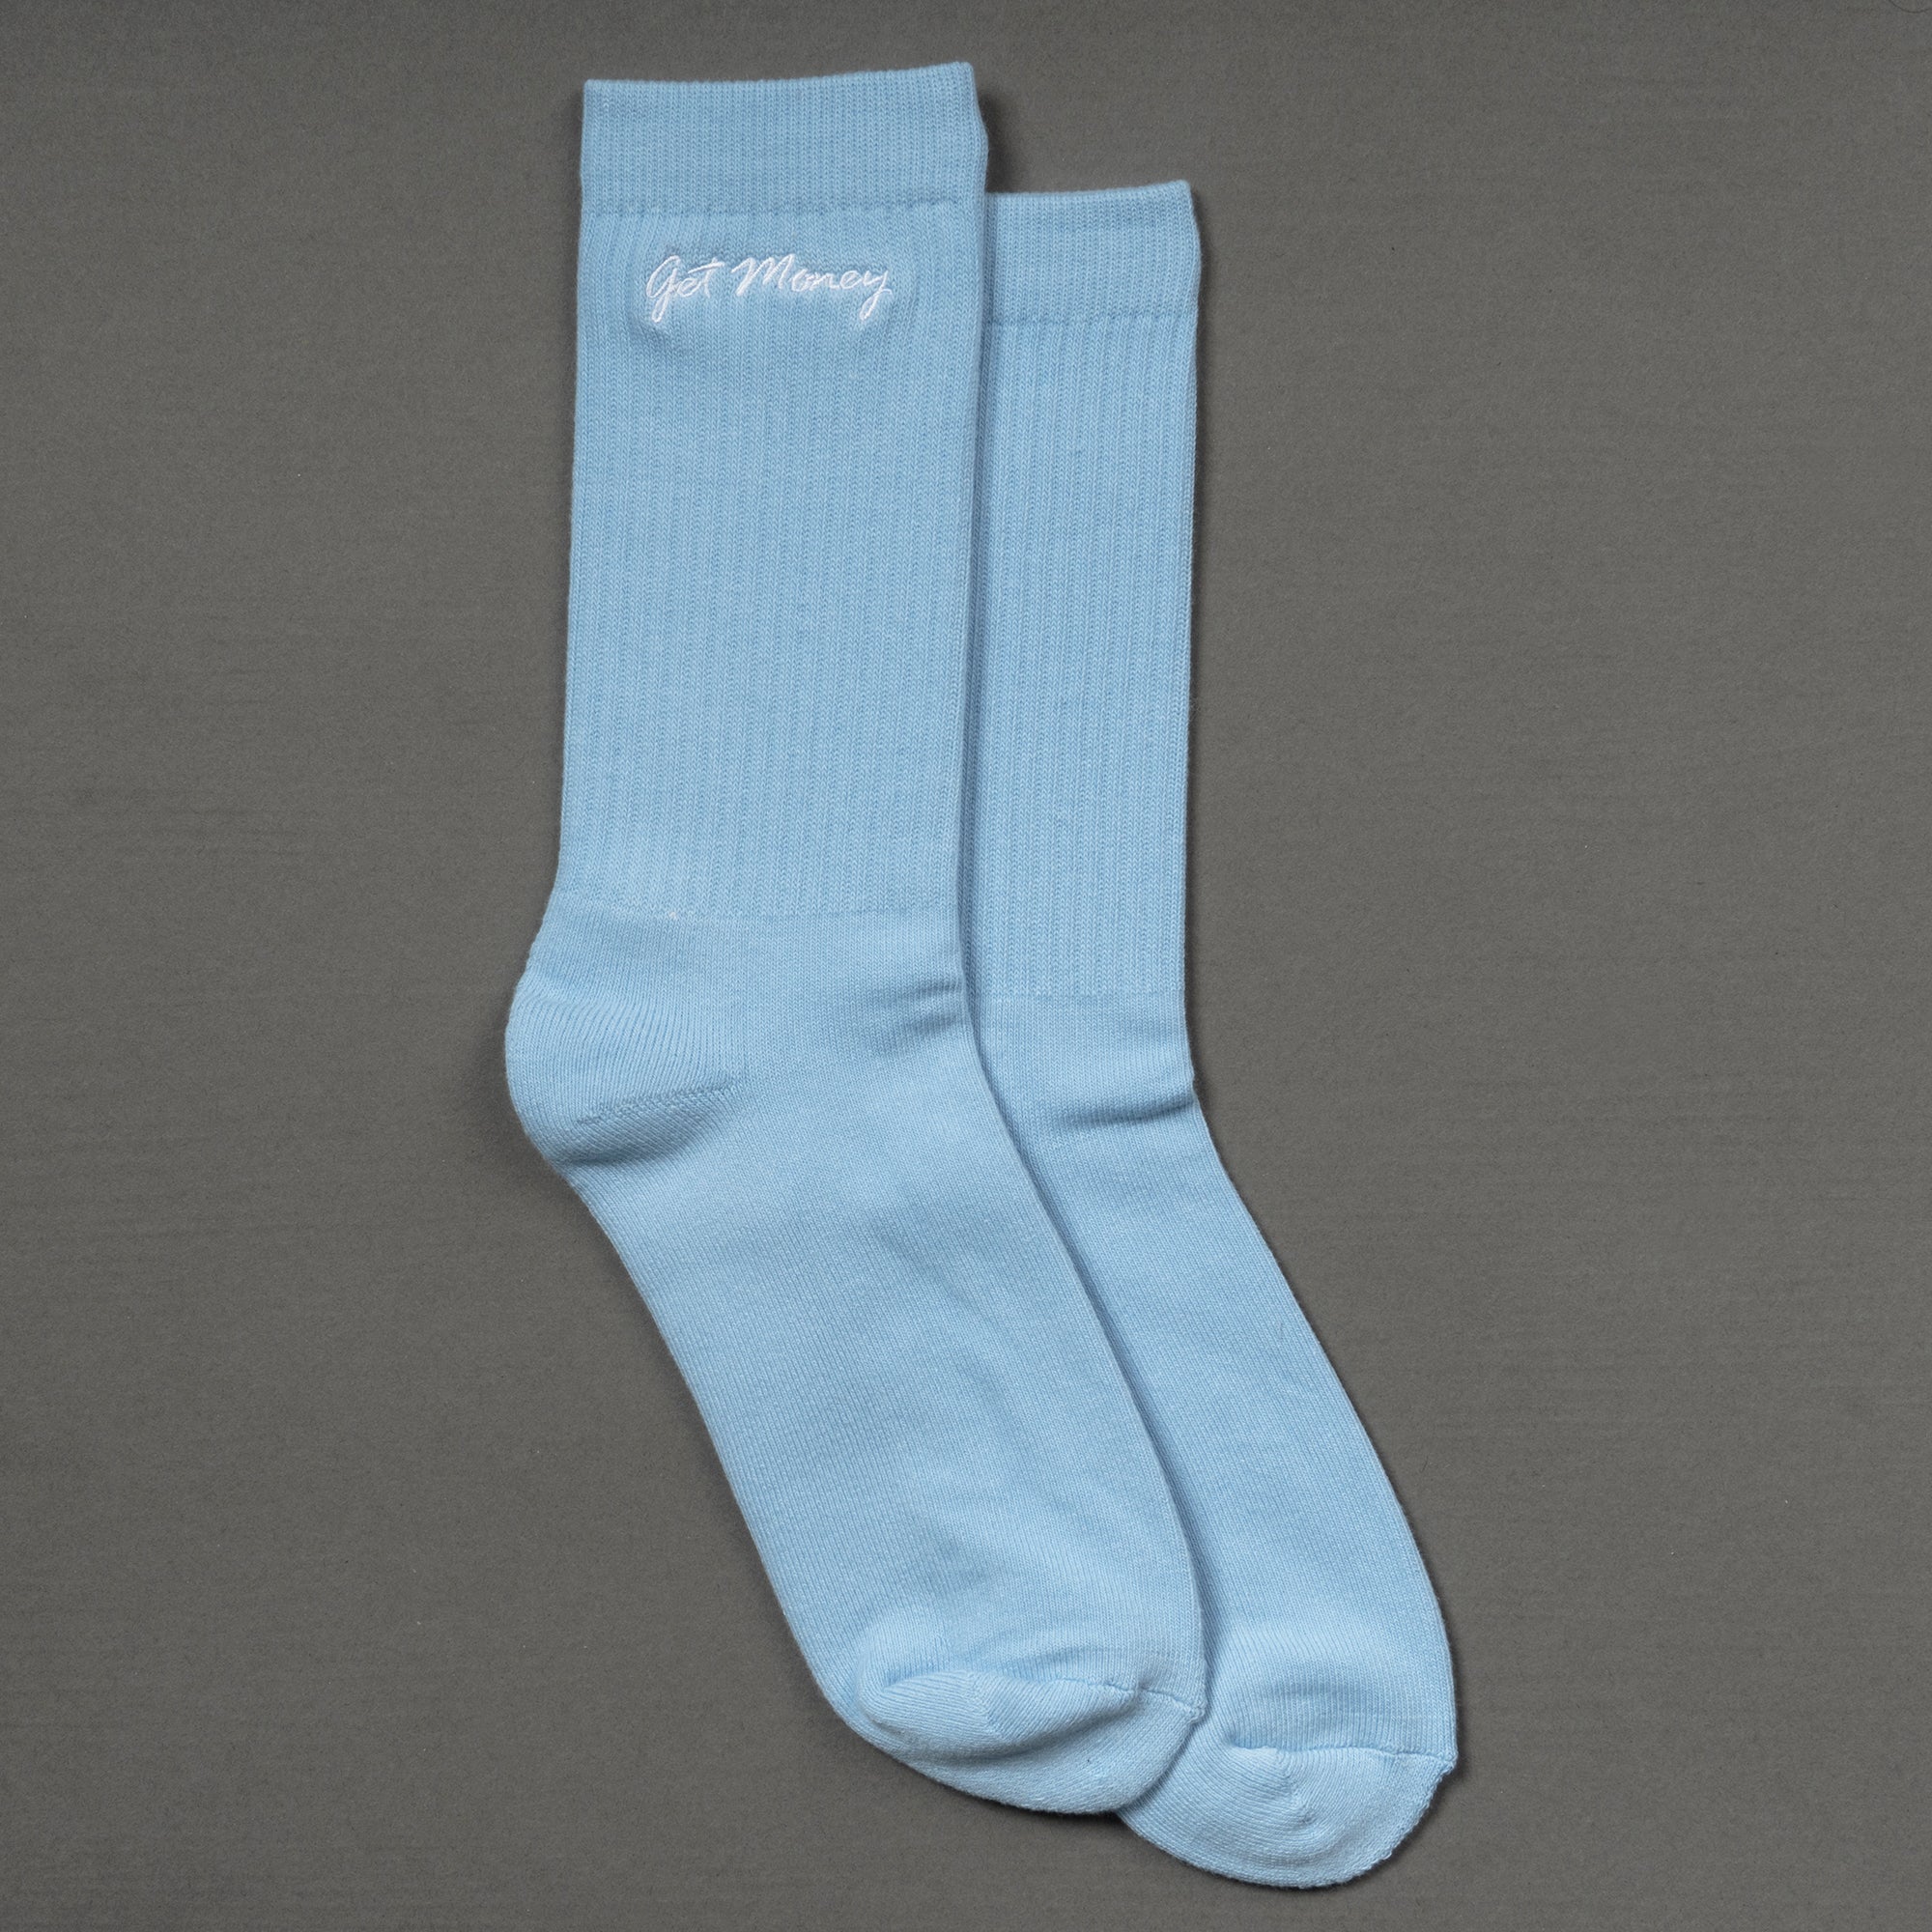 Get Money Socks - Blue